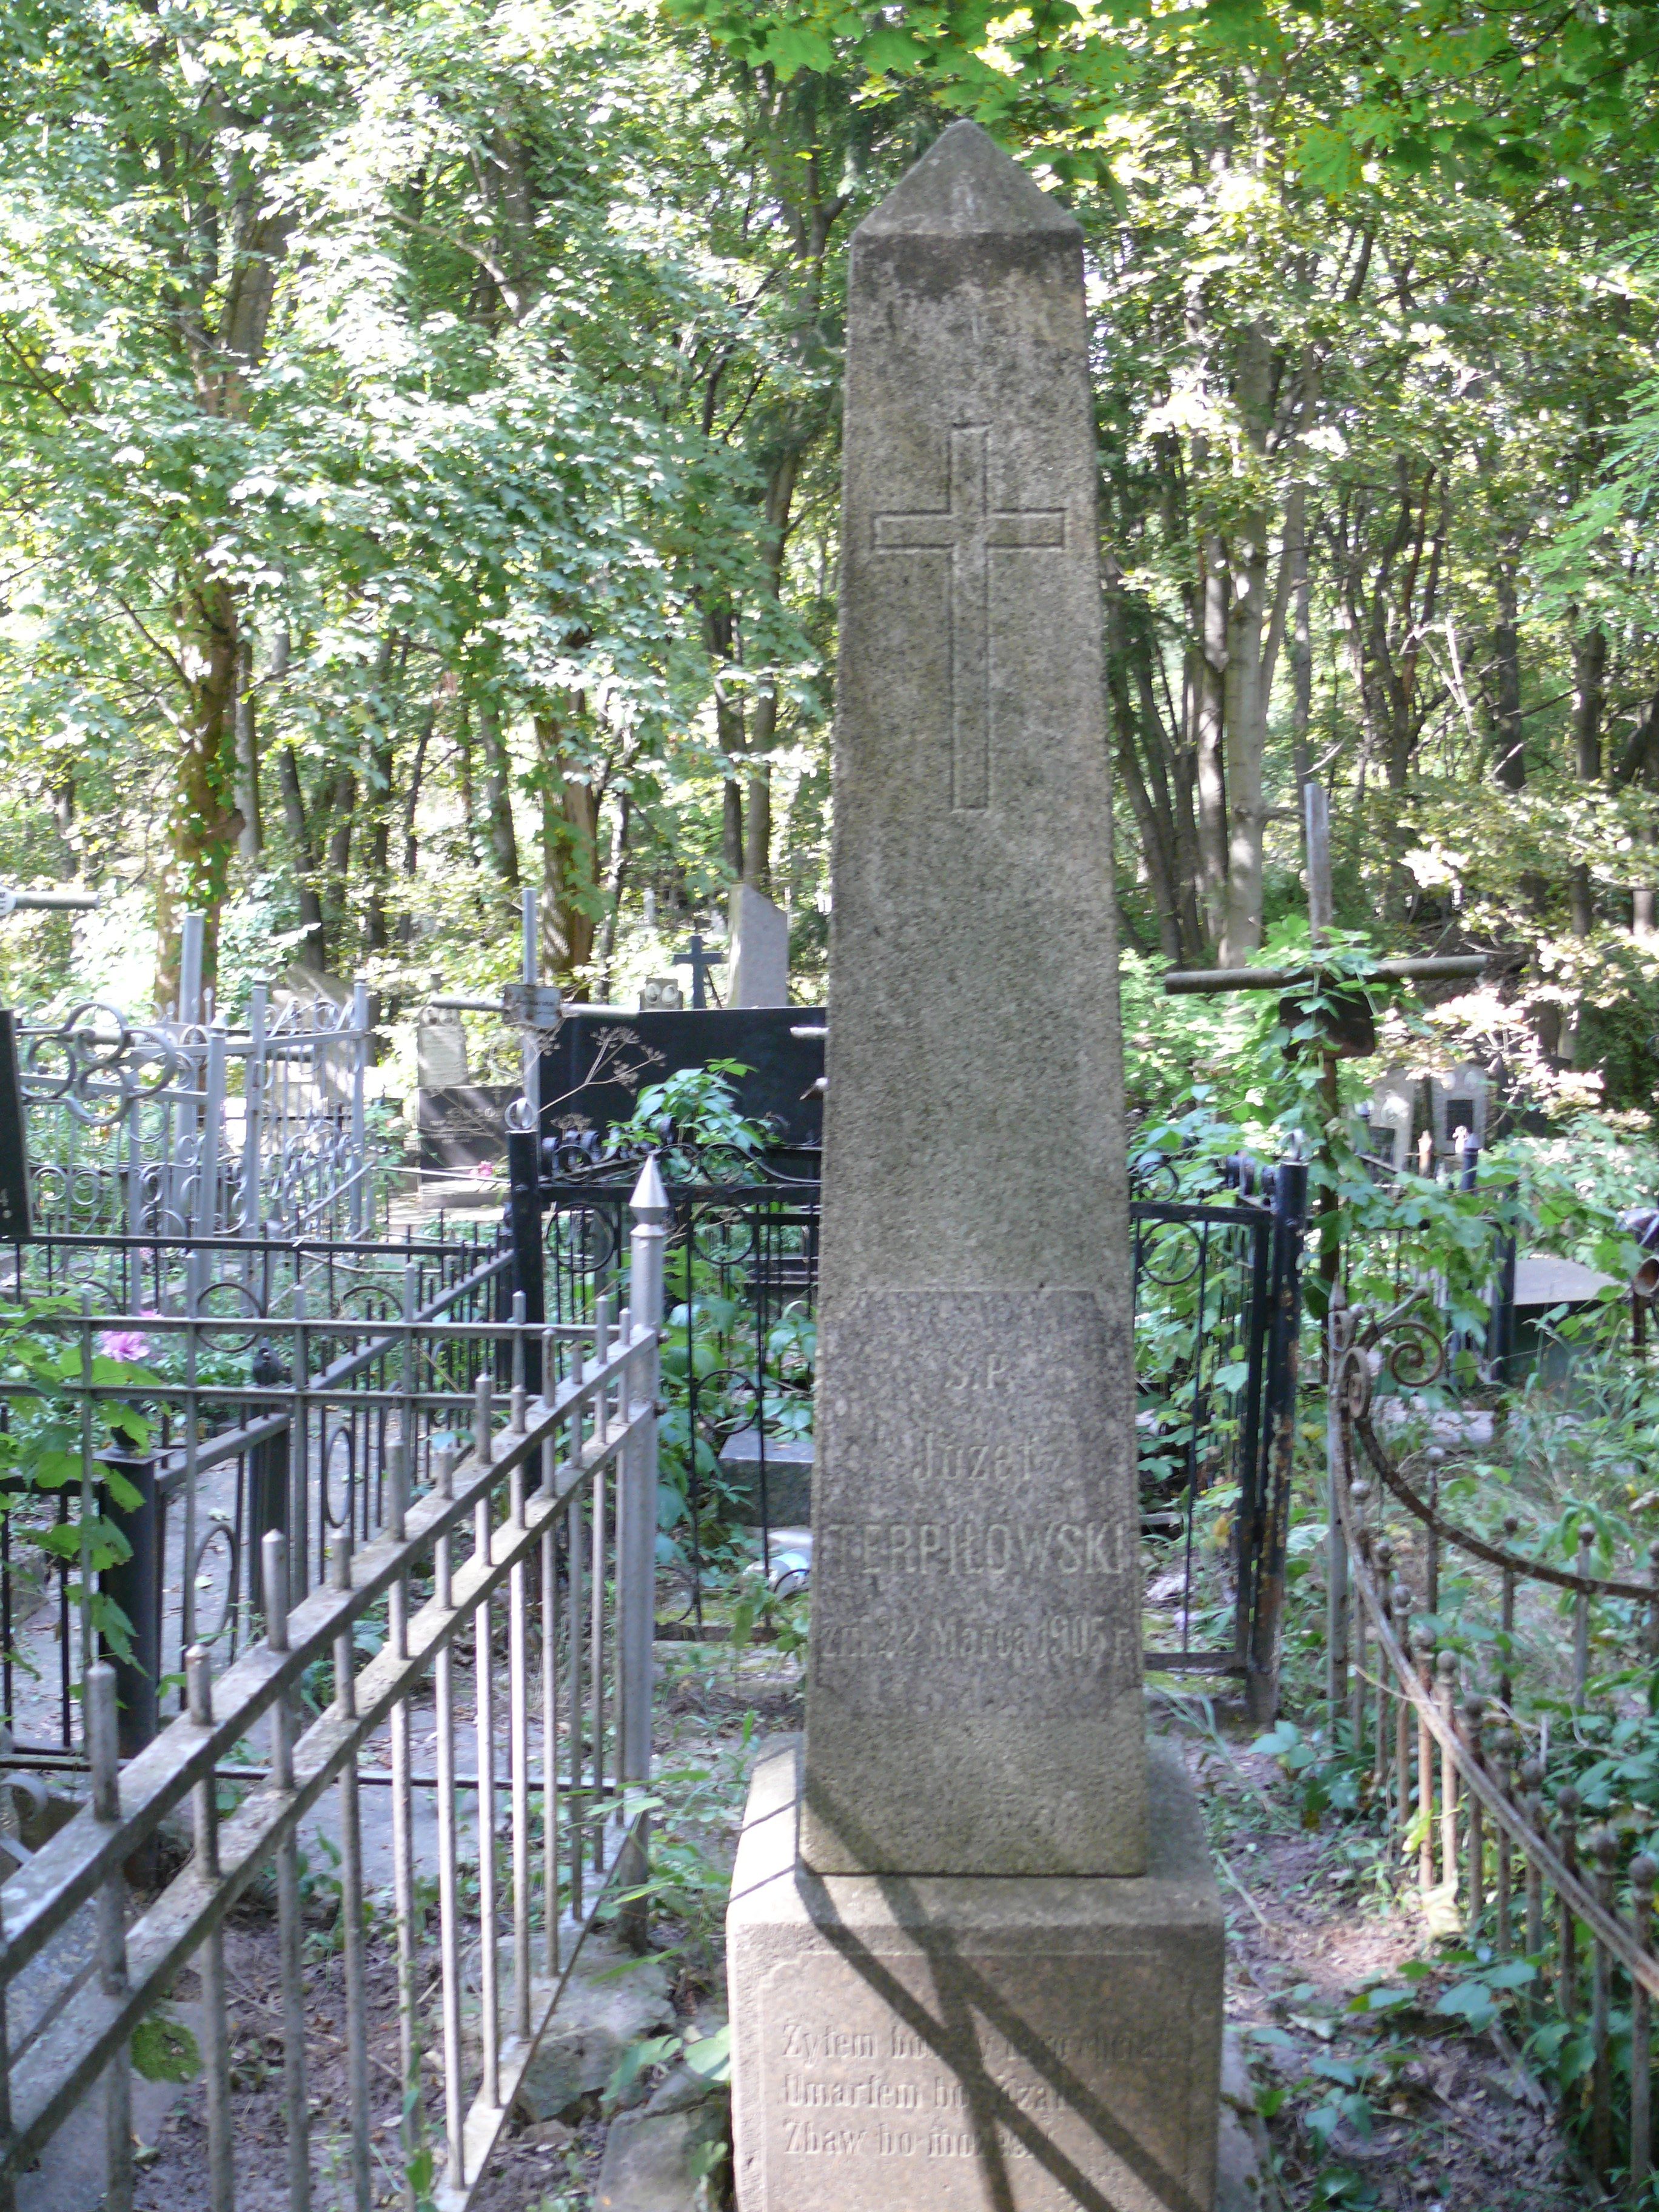 Tombstone of Jozef Terpilowski